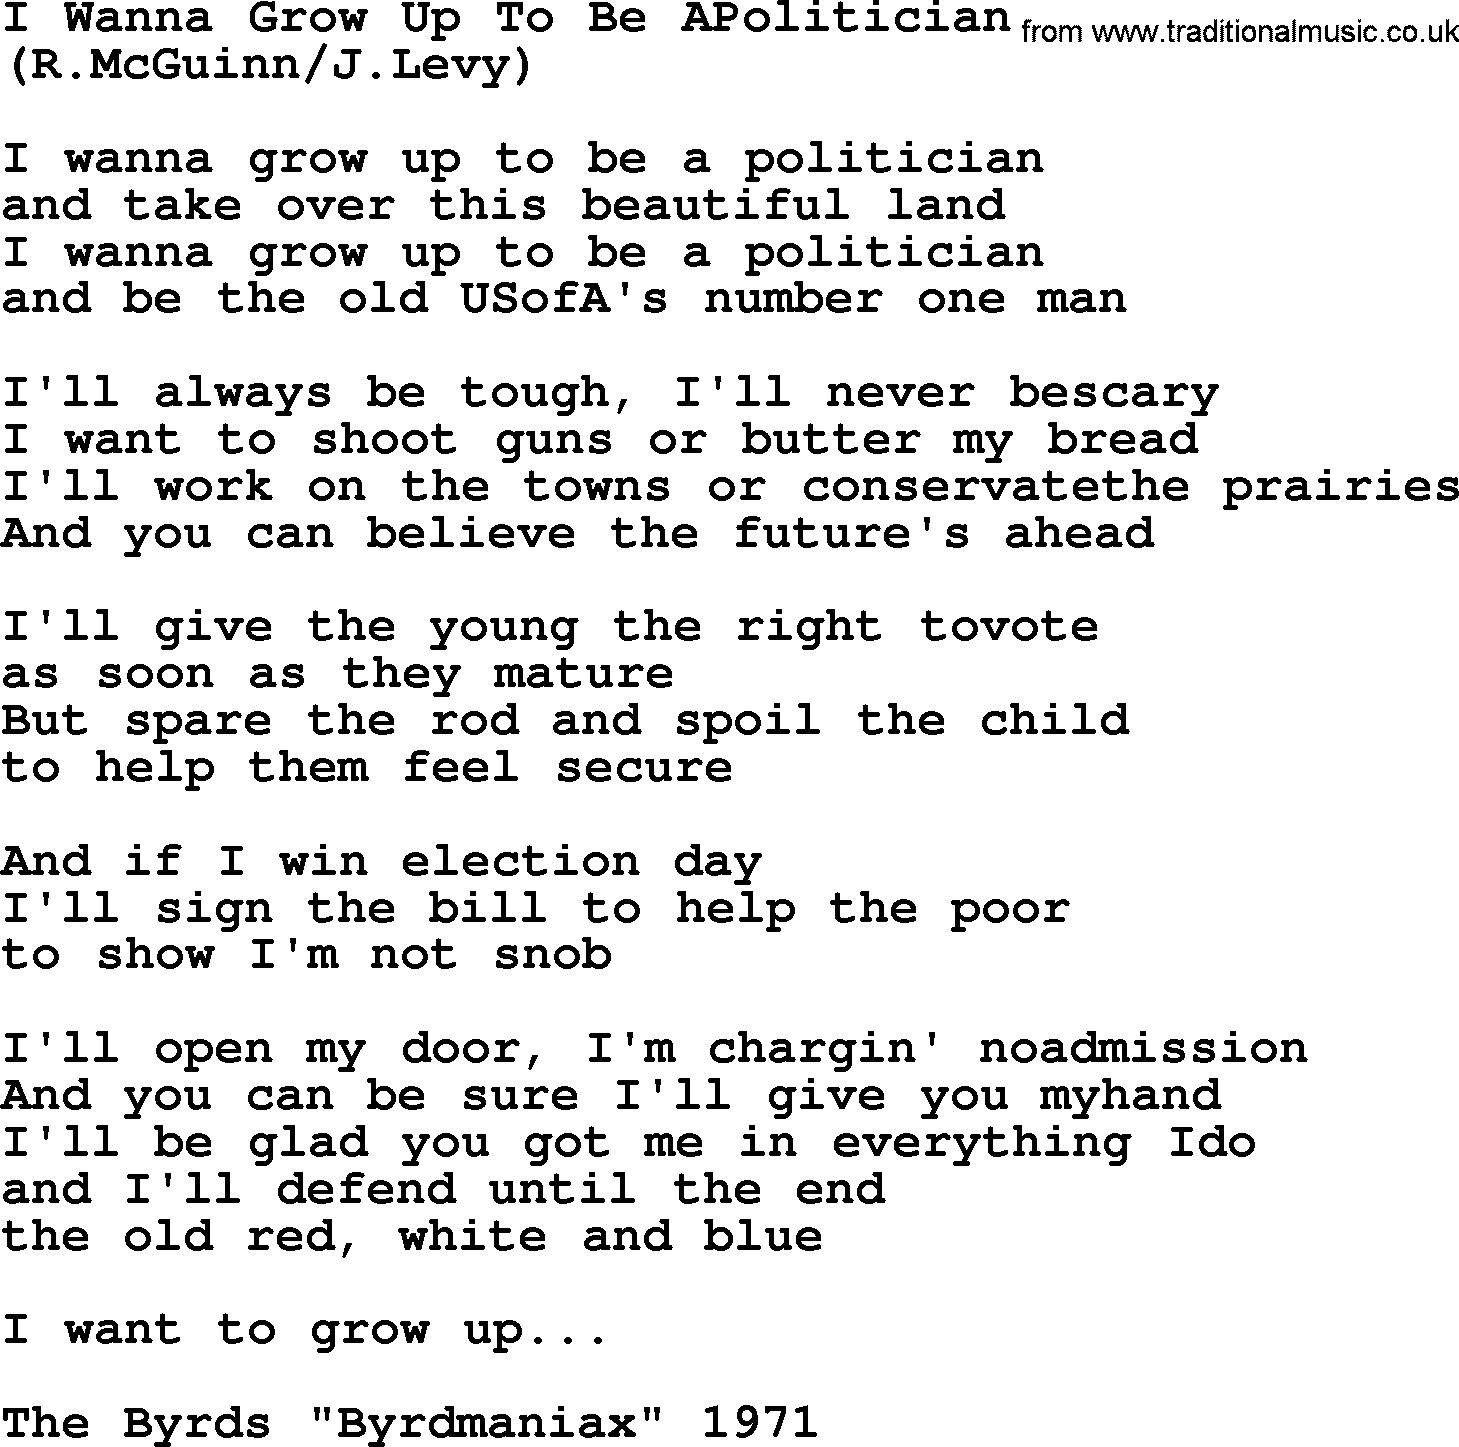 The Byrds song I Wanna Grow Up To Be Apolitician, lyrics